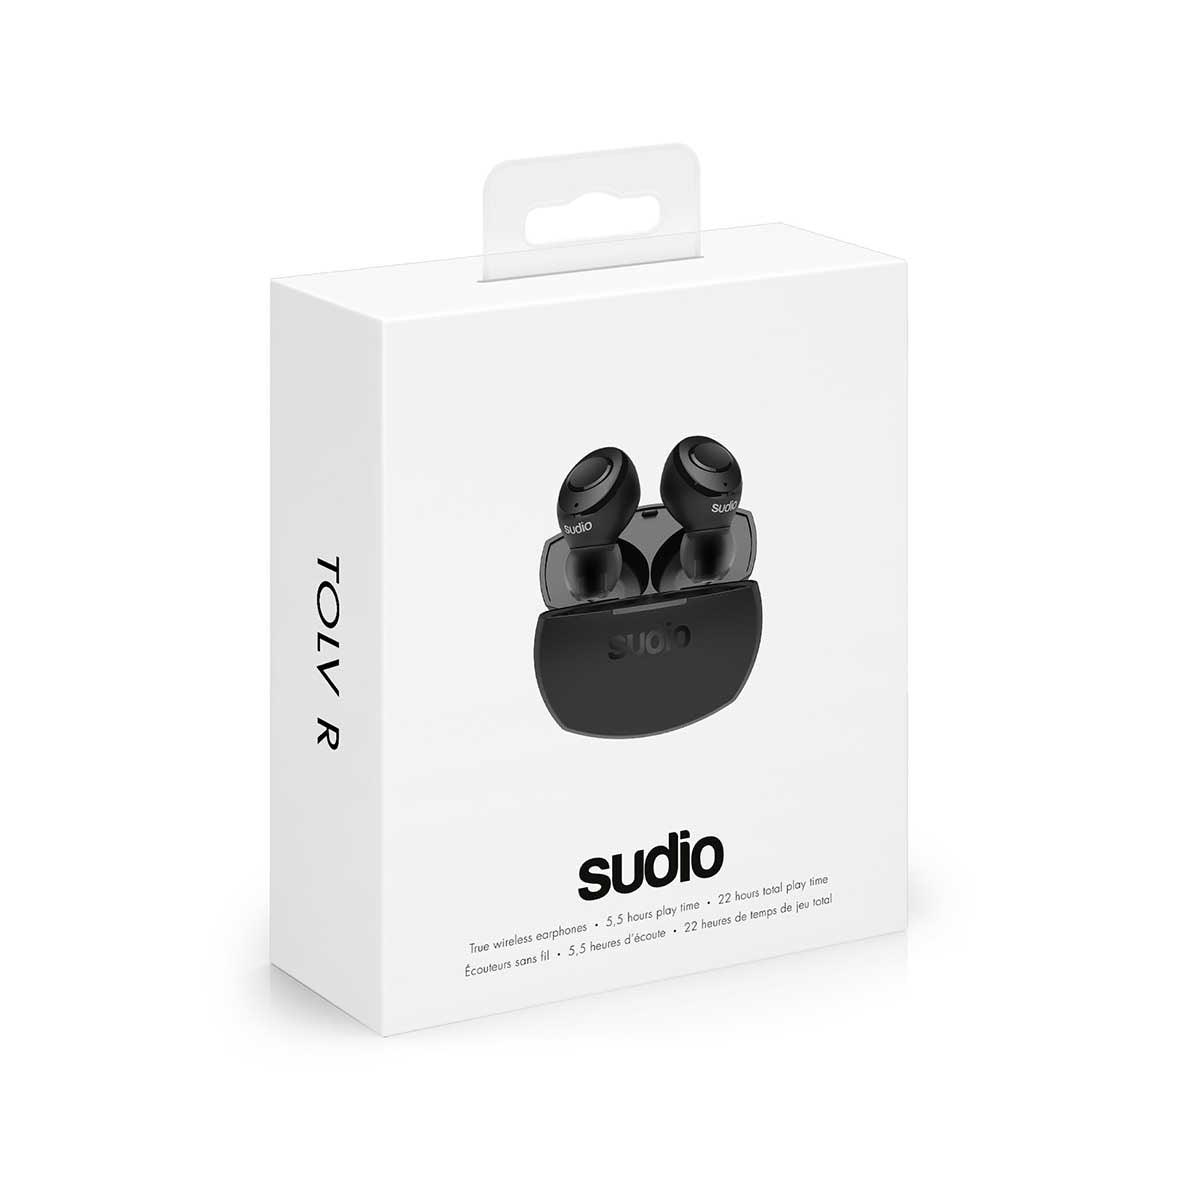 sudio earphones price